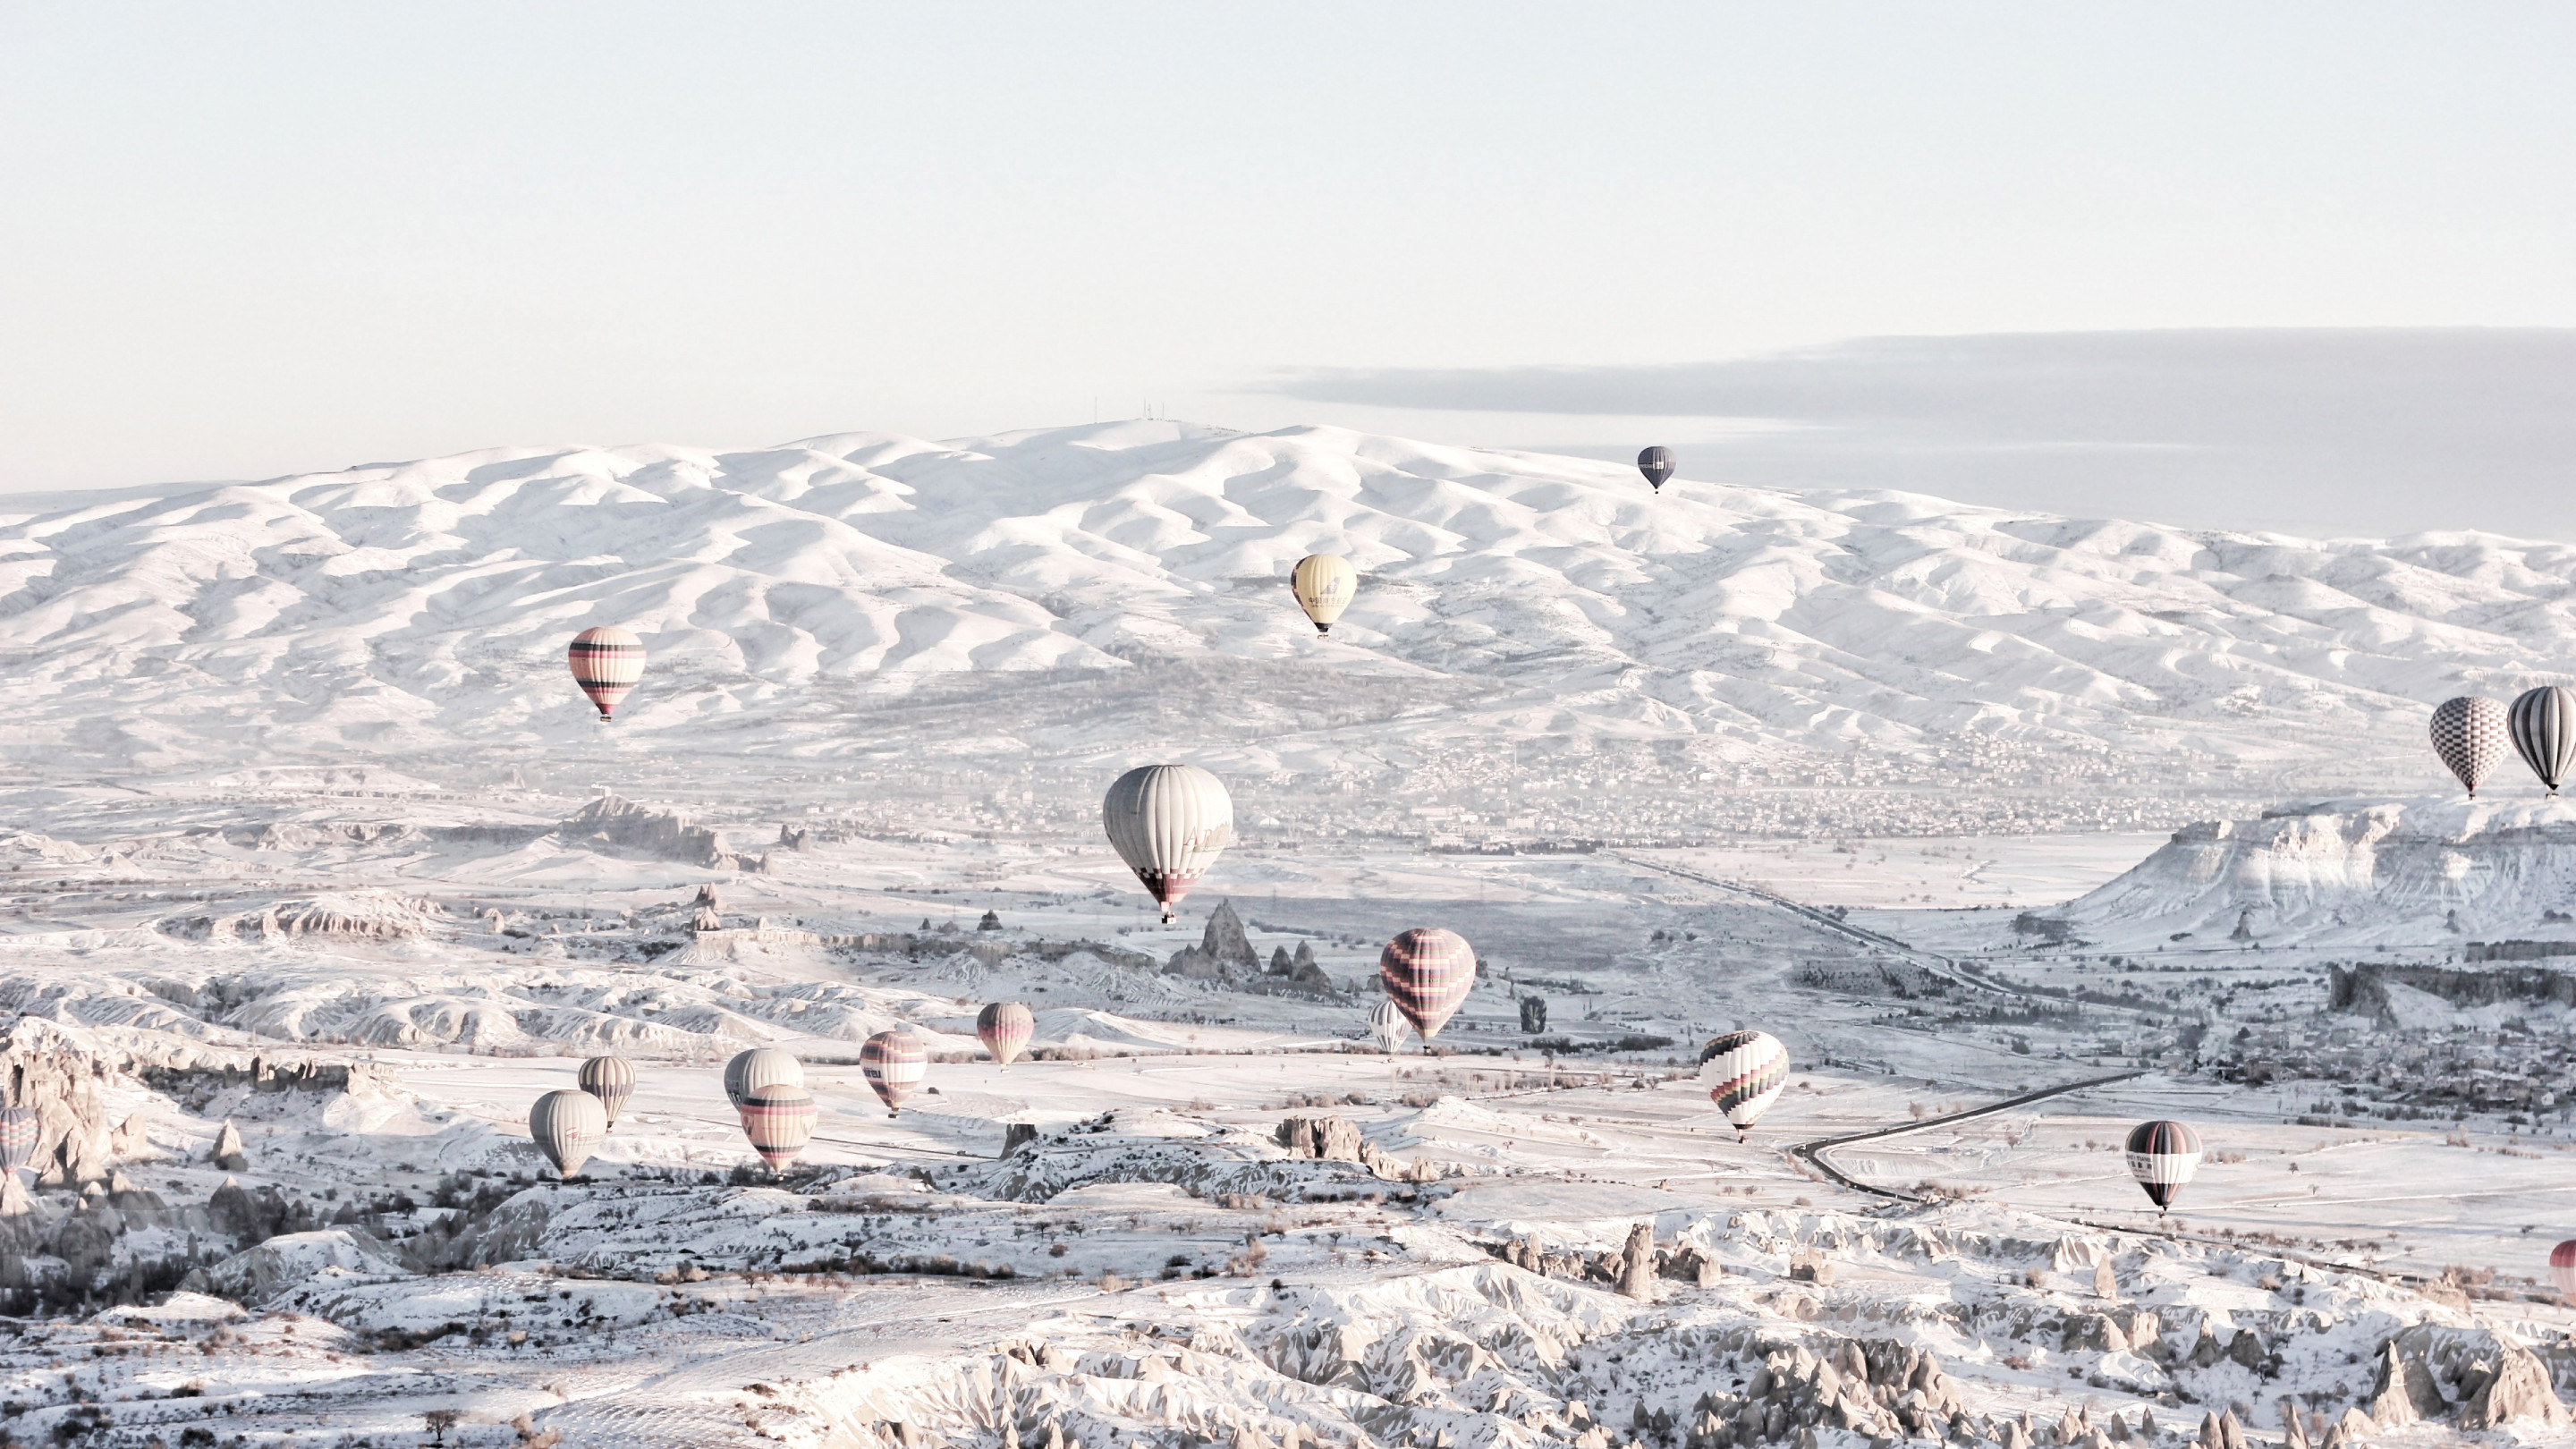 Hot air balloons in Winter landscape wallpaper 2880x1620